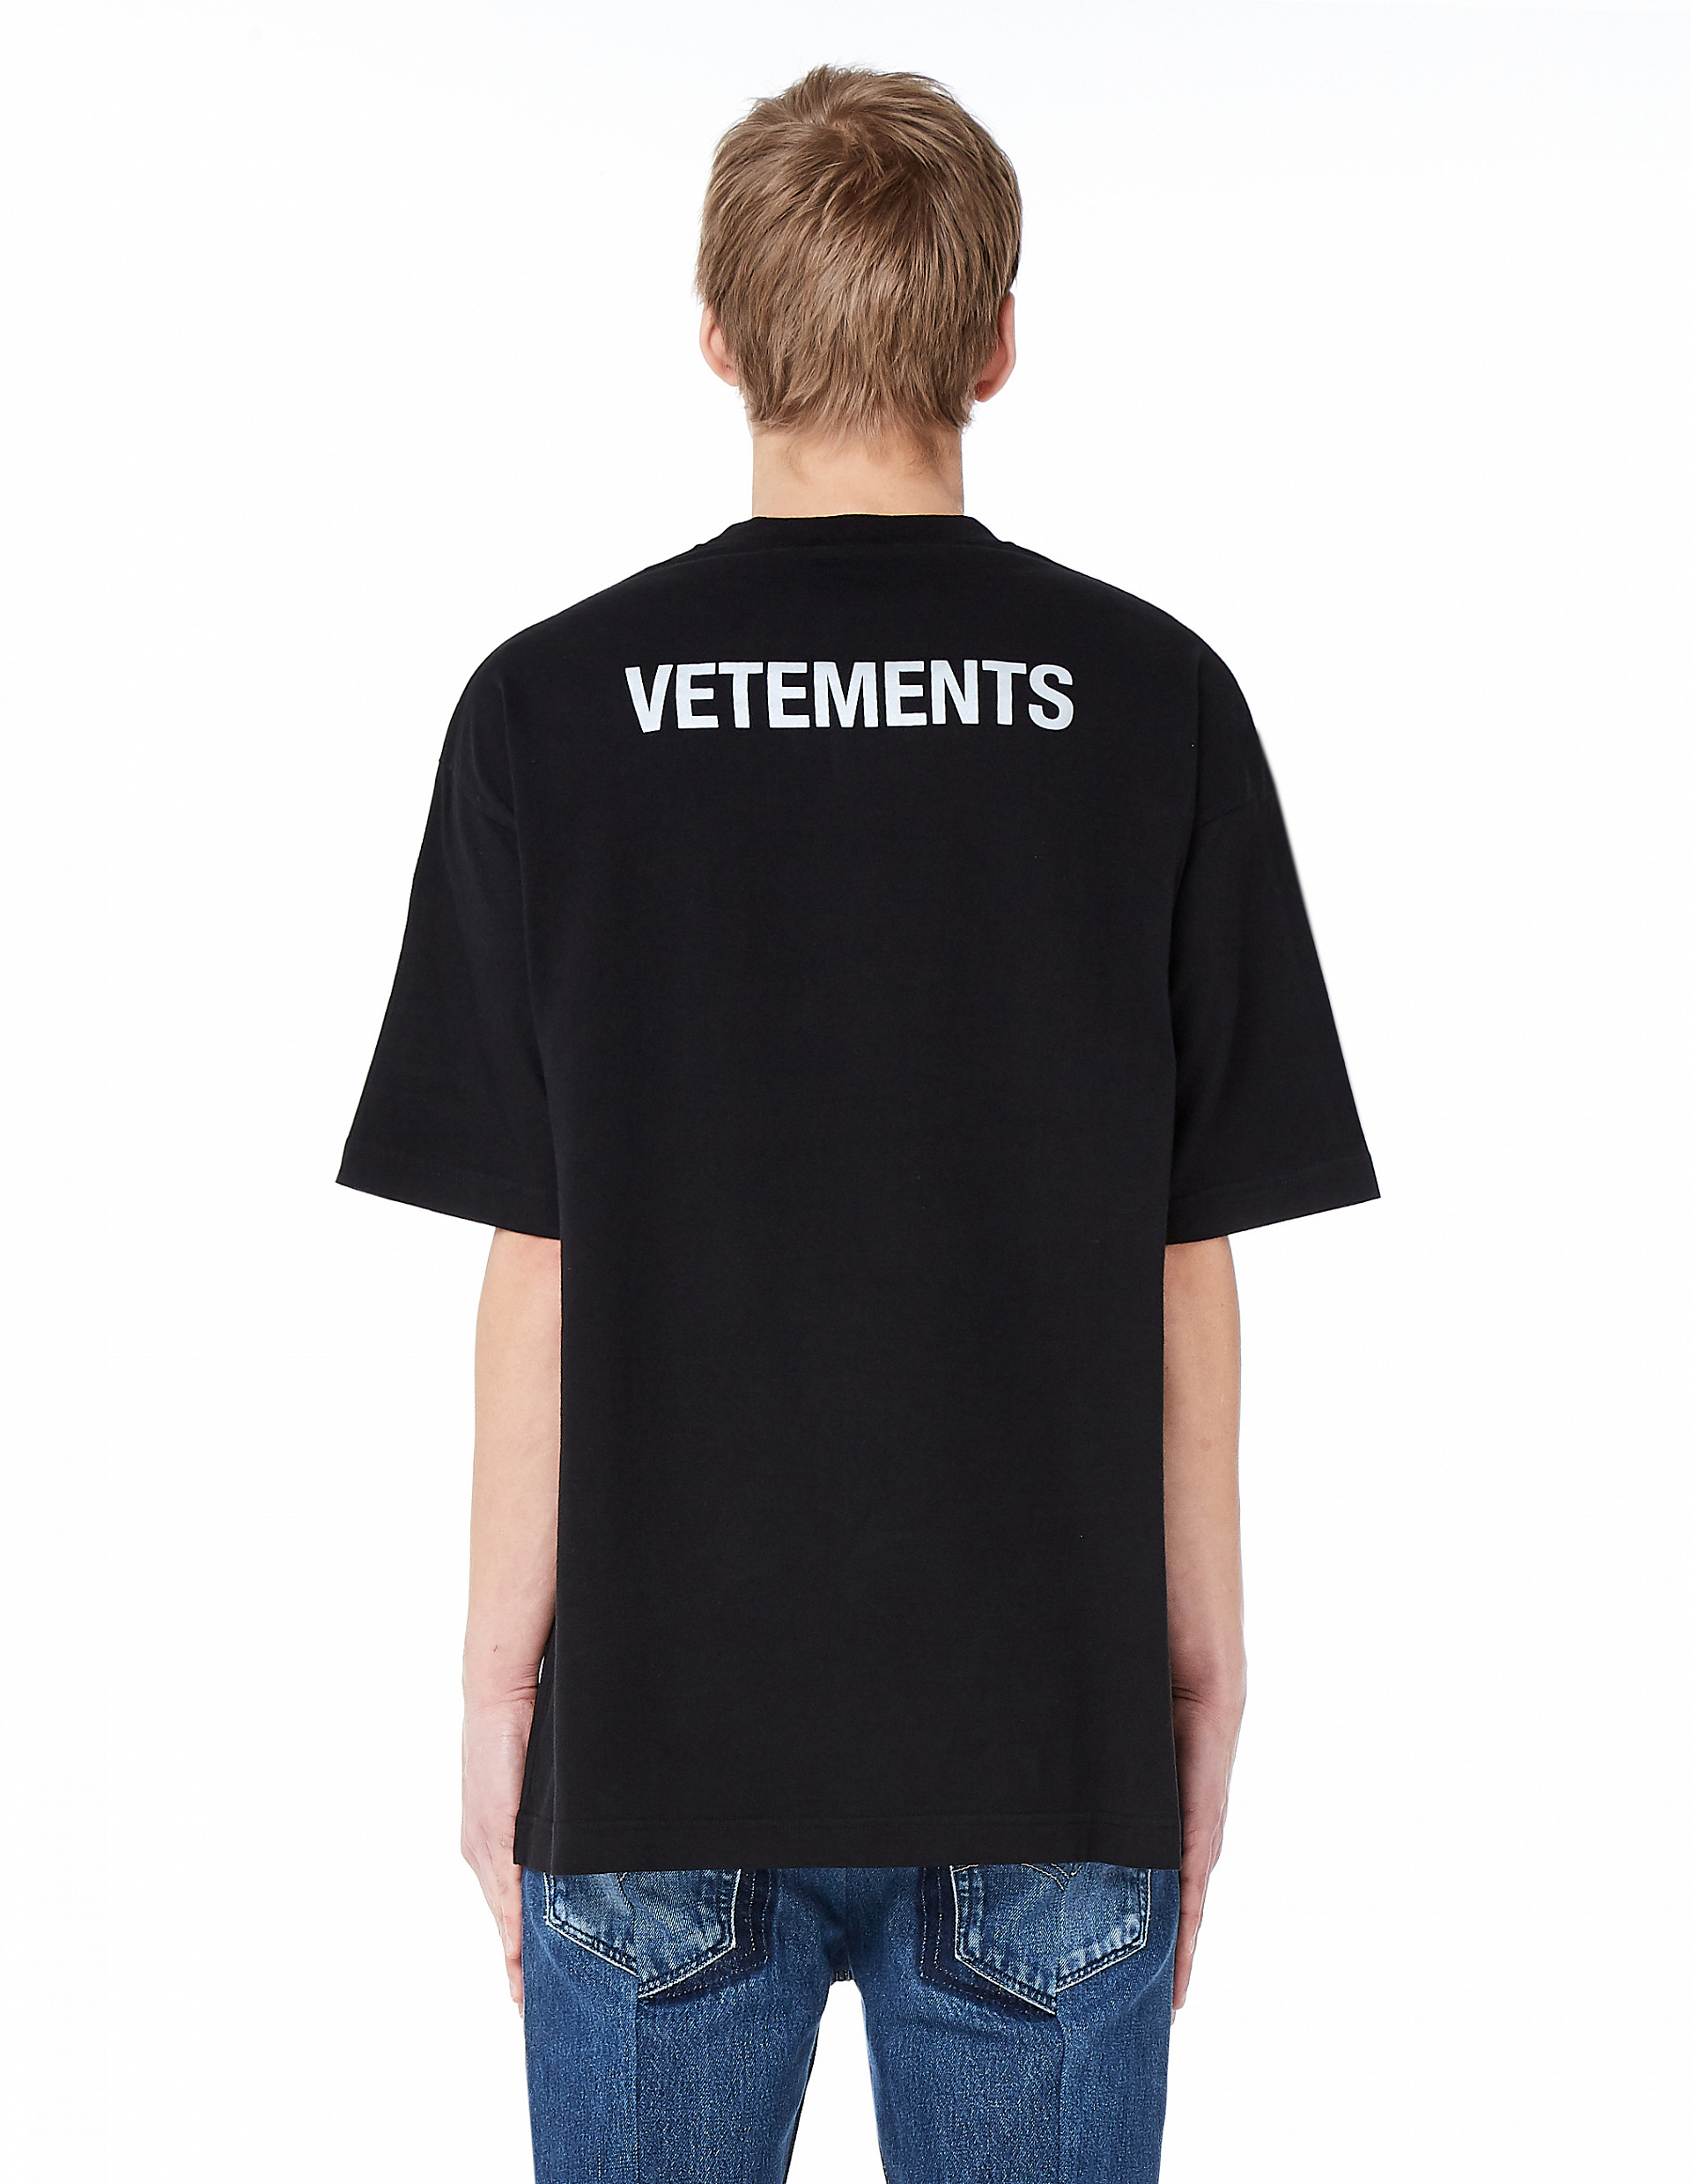 Buy Vetements men black cotton t-shirt staff for $275 online on